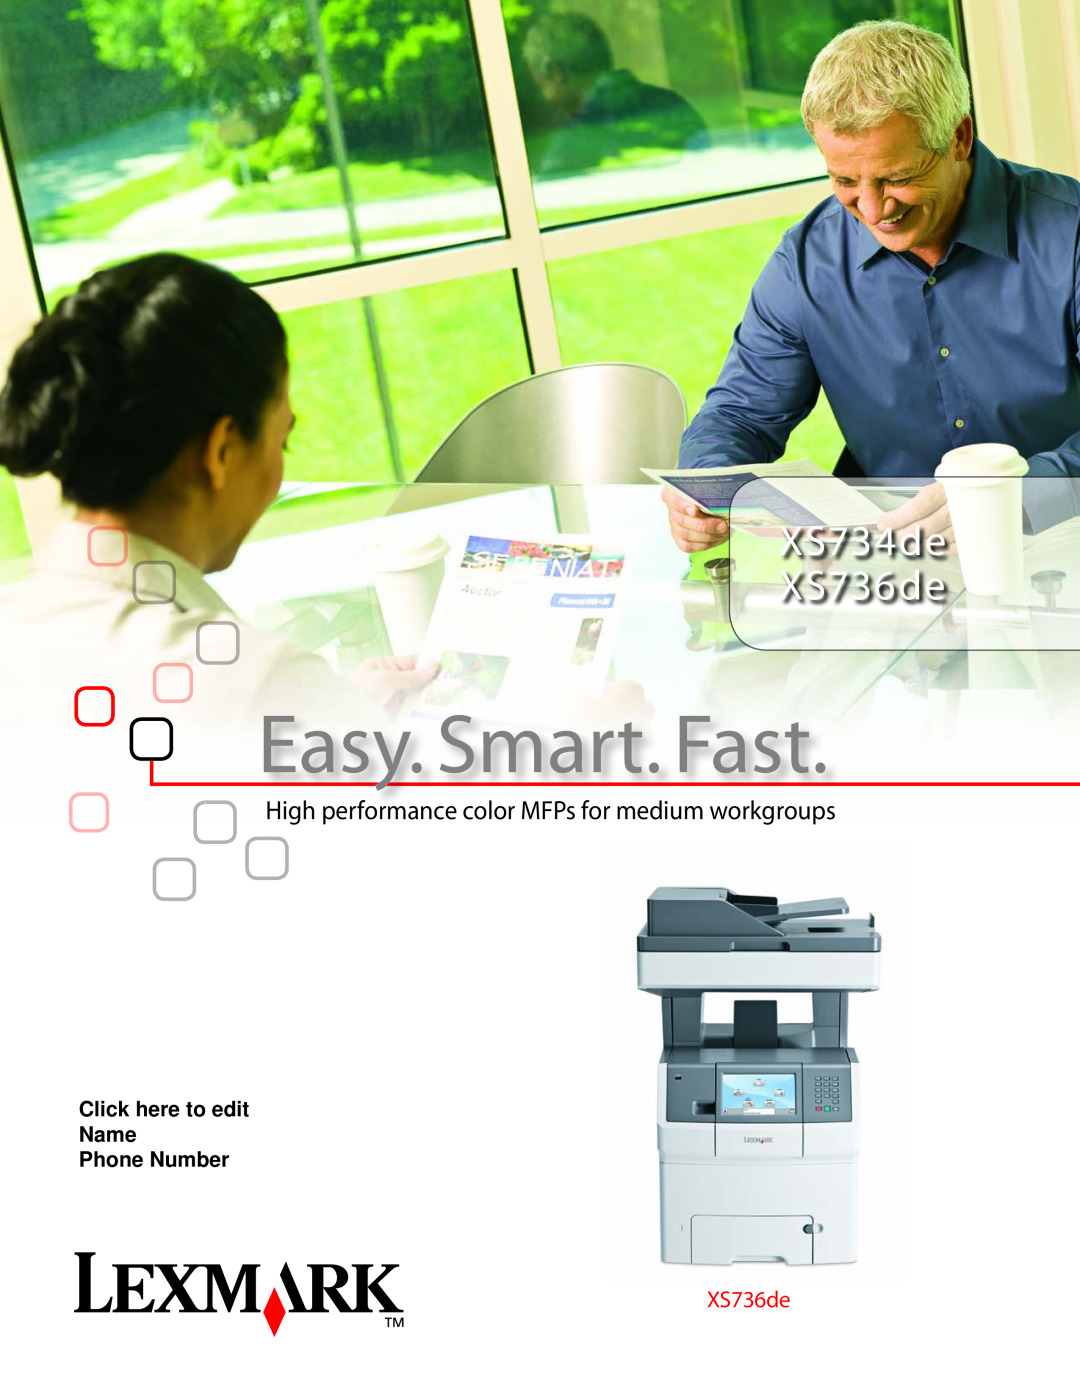 Lexmark manual Easy. Smart. Fast, XS734de XS736de, High performance color MFPs for medium workgroups 